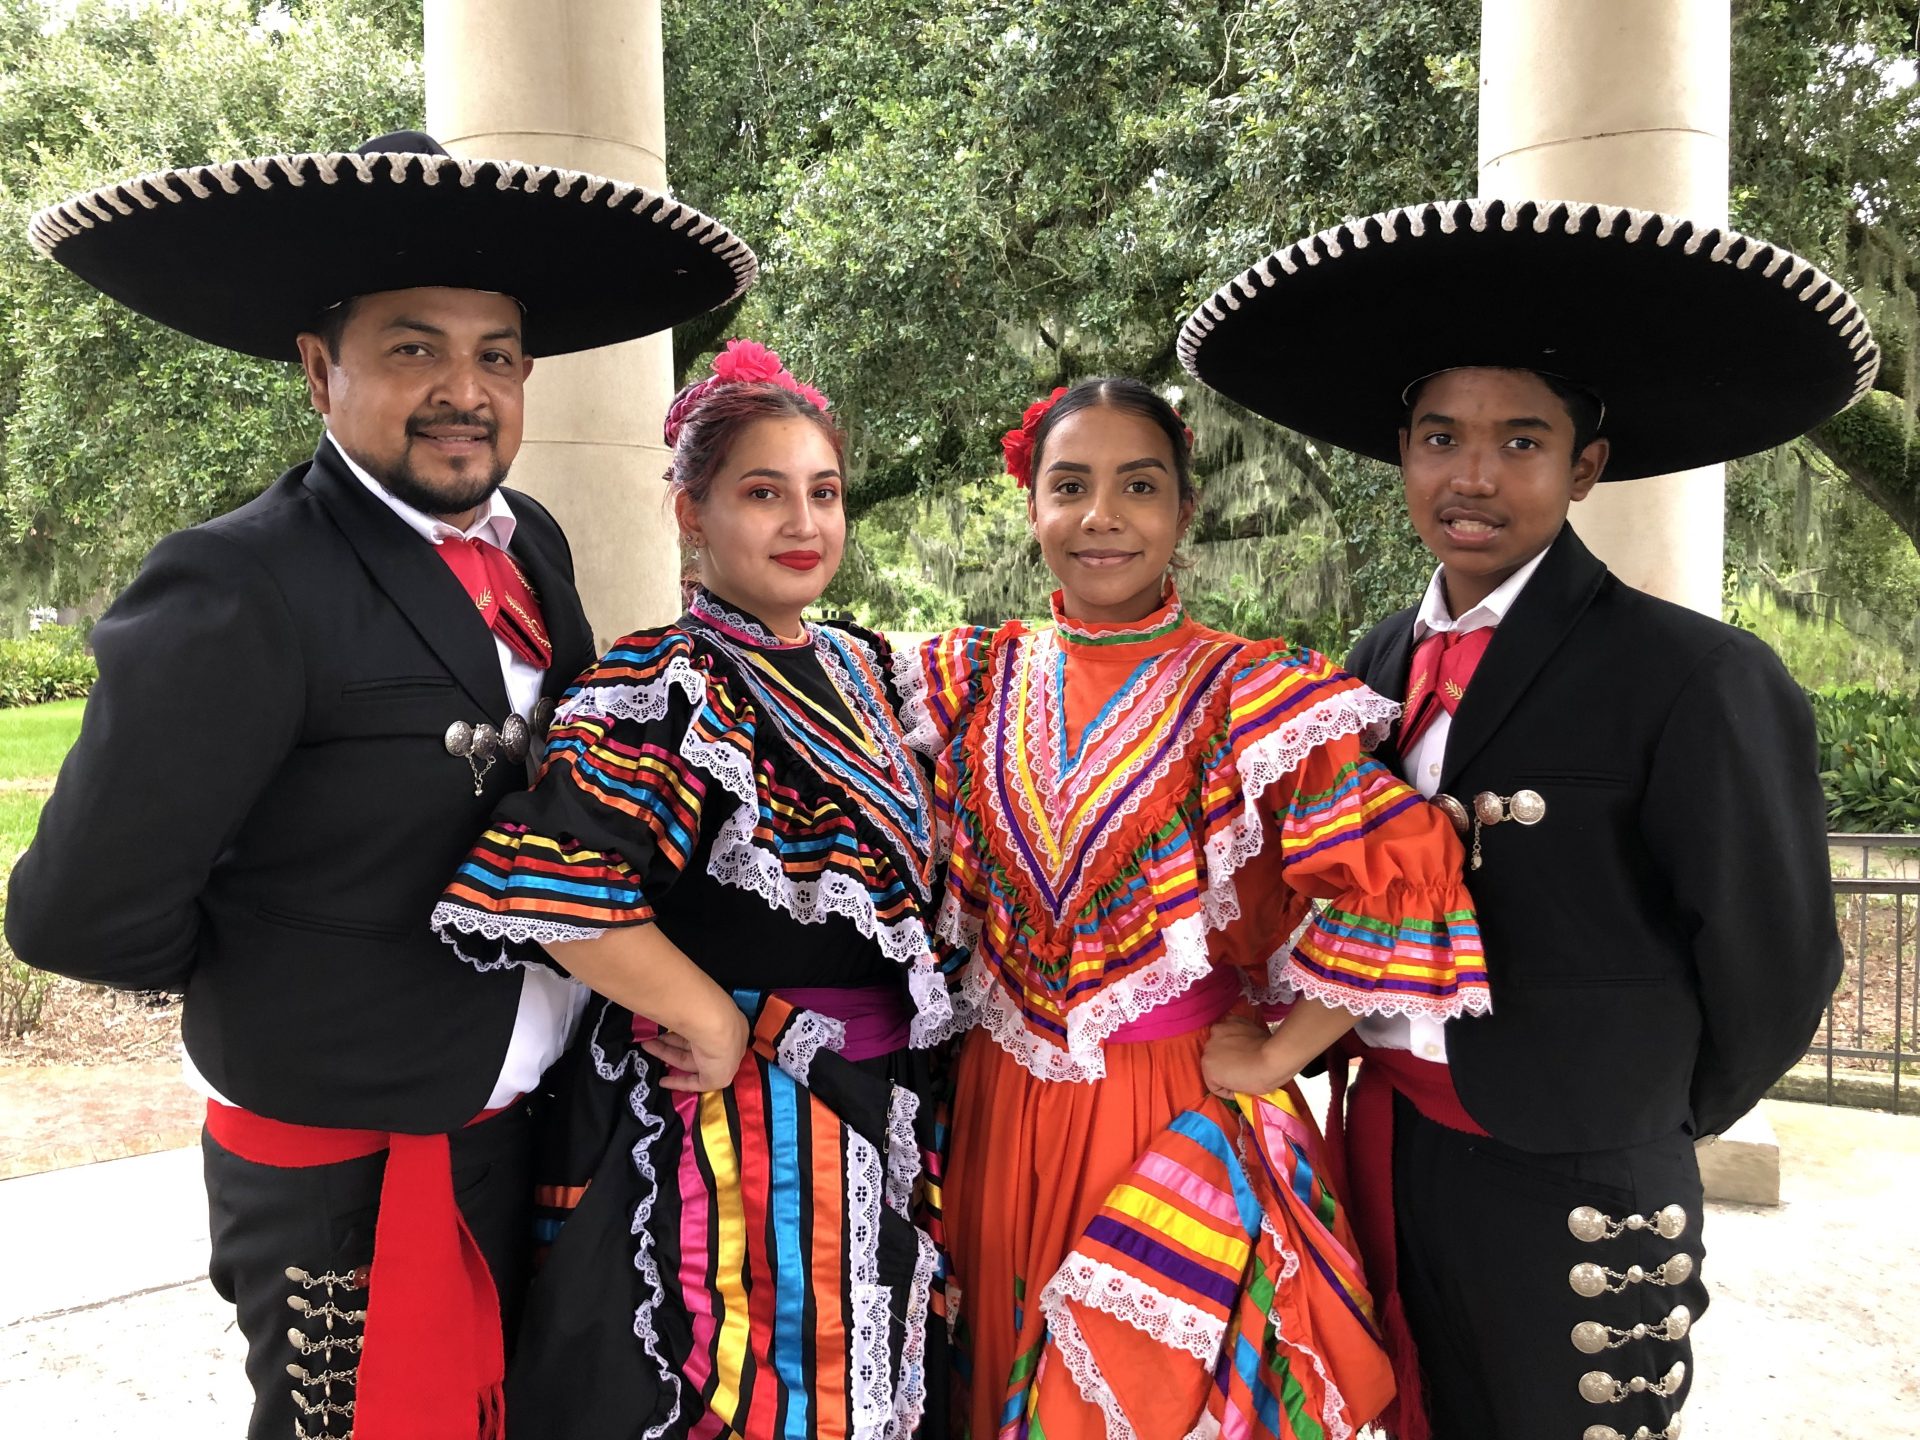 Hispanic Heritage Celebration with Ecos Latinos - New Orleans Museum of Art